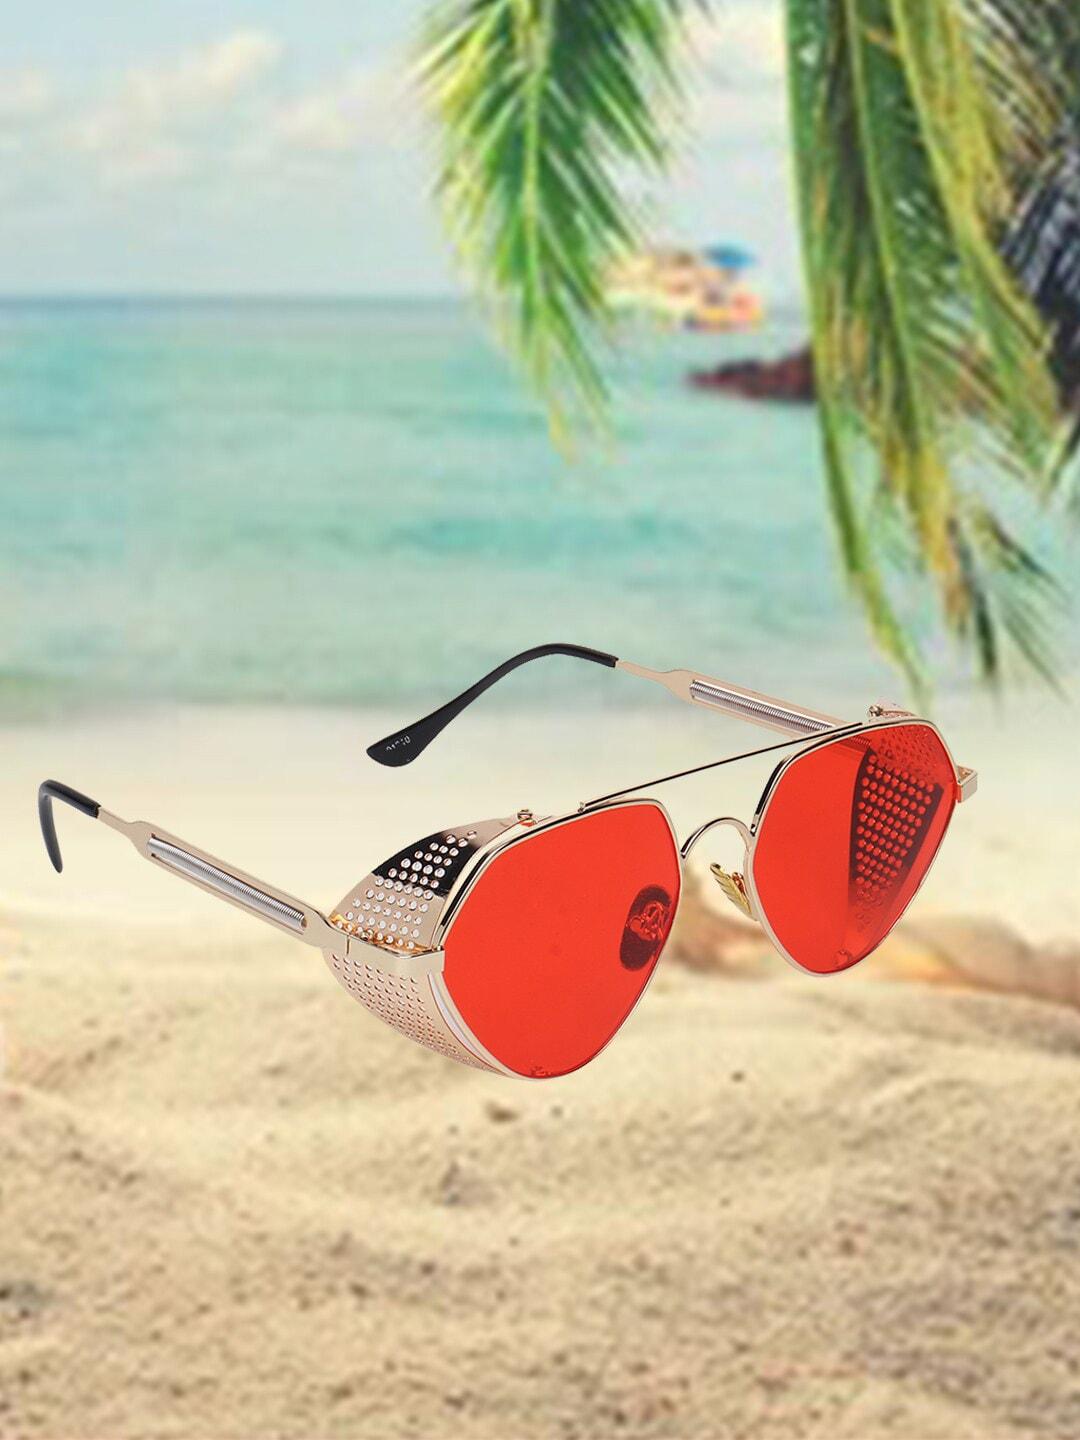 celebrity sunglassesaviator sunglasses with uv protected lens clsg-91210-09